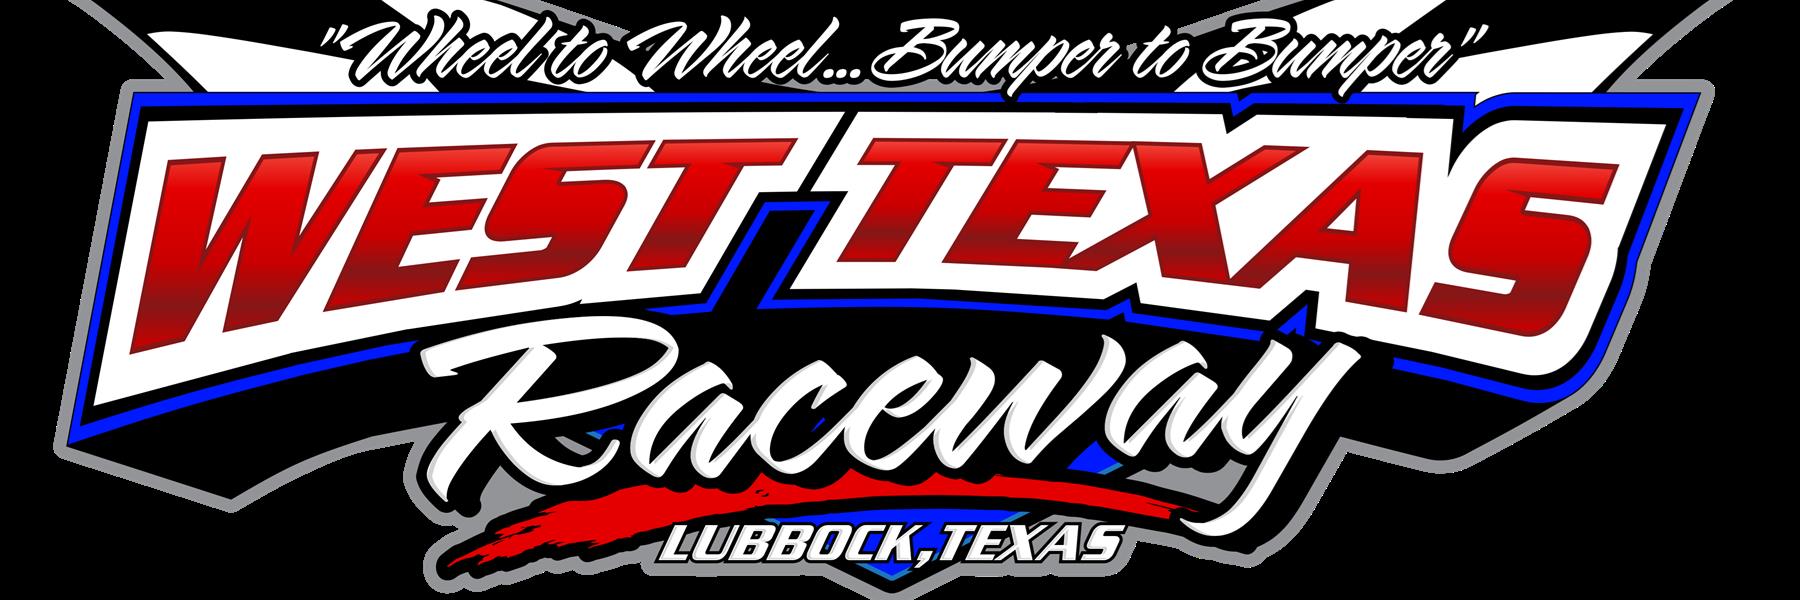 4/30/2021 - West Texas Raceway